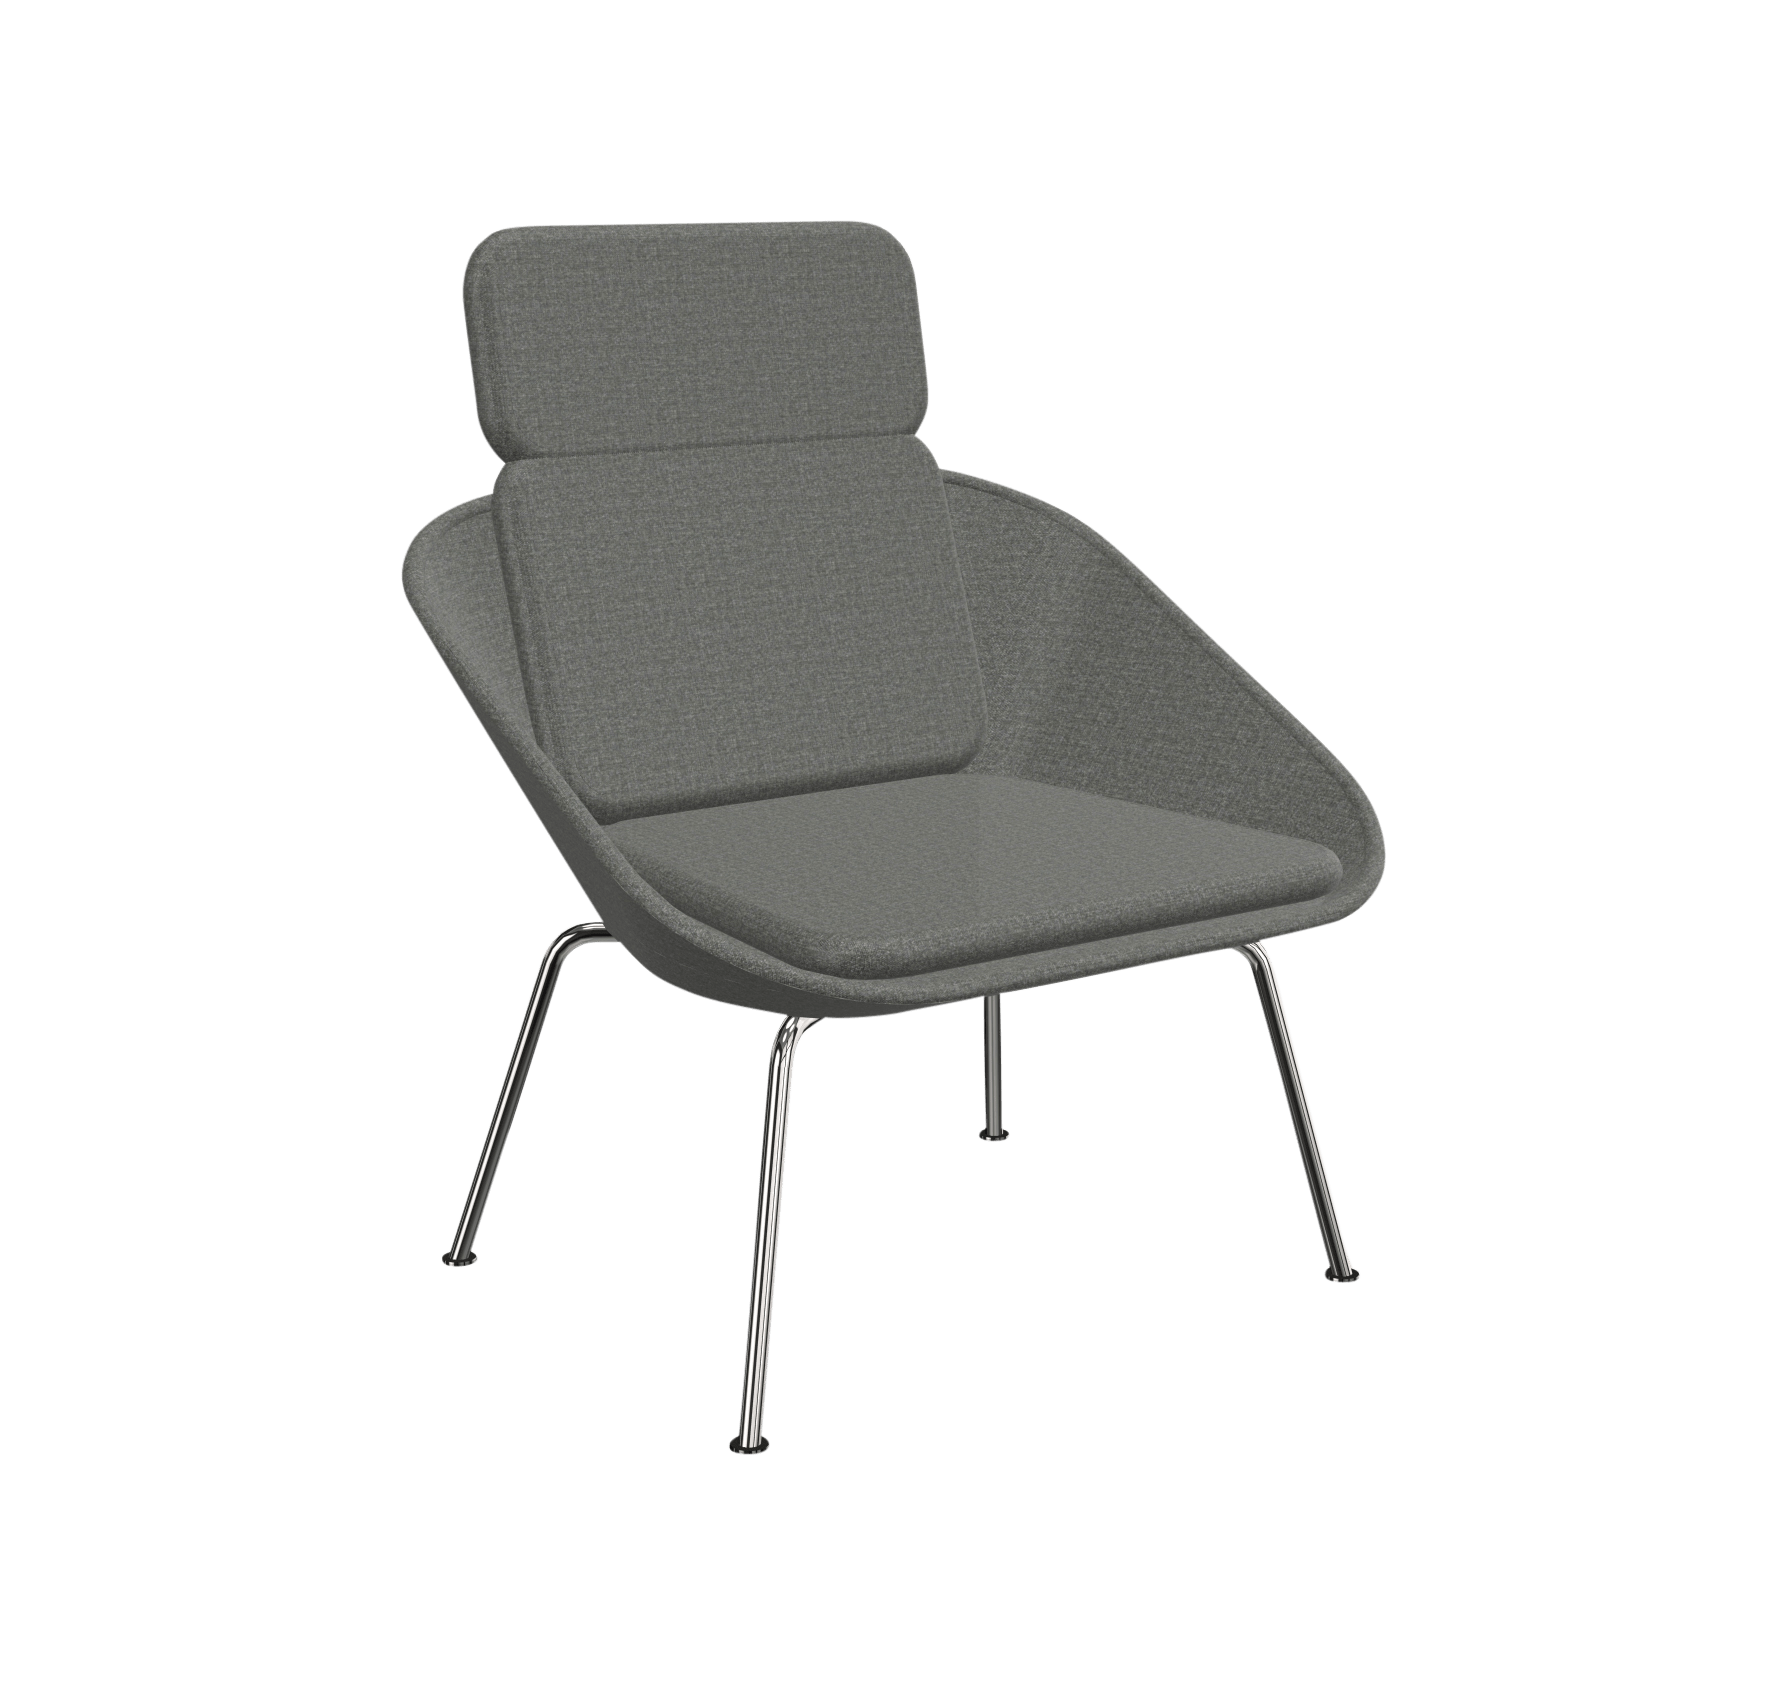 A grey lounge chair